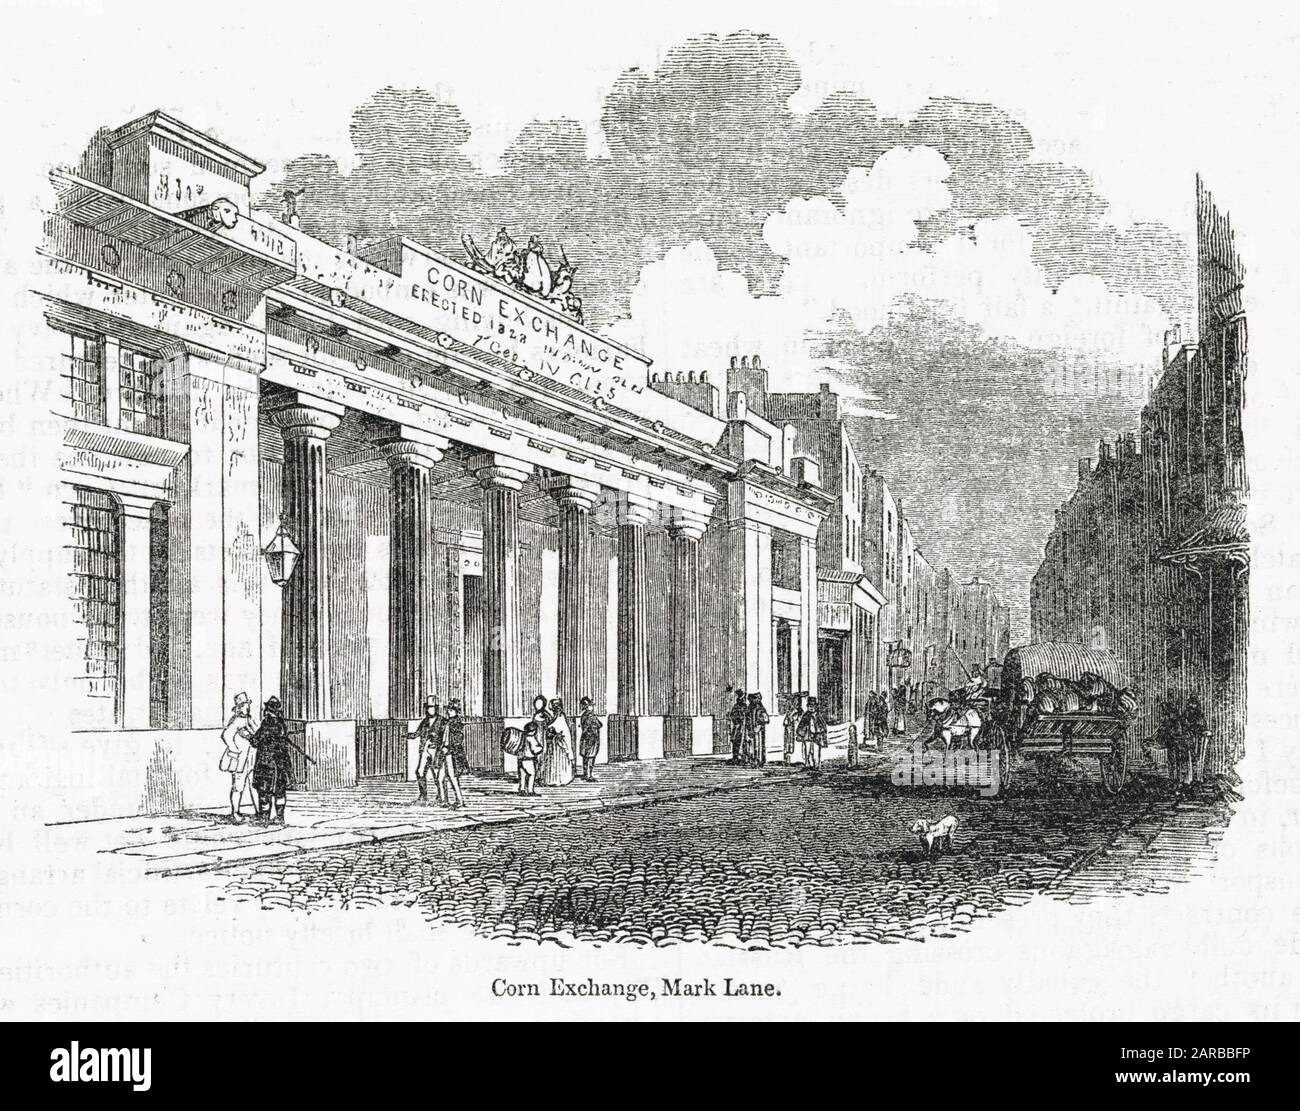 Das Corn Exchange Gebäude in Mark Lane, London. Datum: 1845 Stockfoto